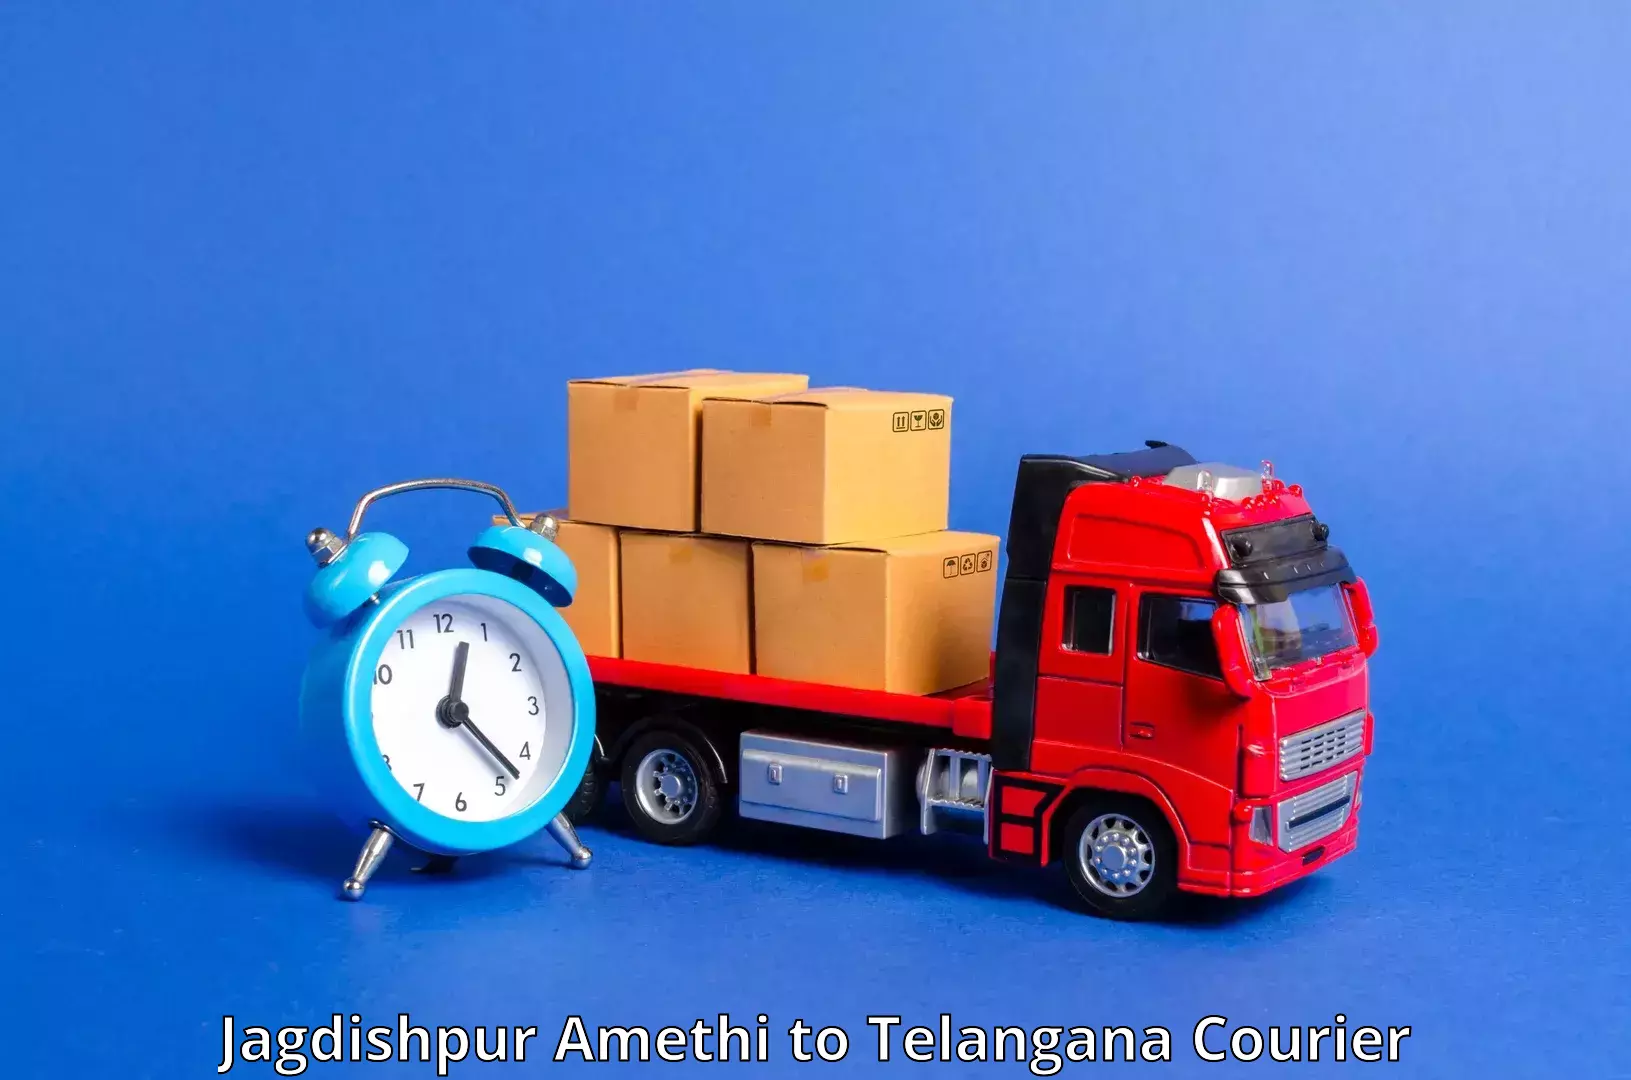 Express logistics providers Jagdishpur Amethi to Mudigonda